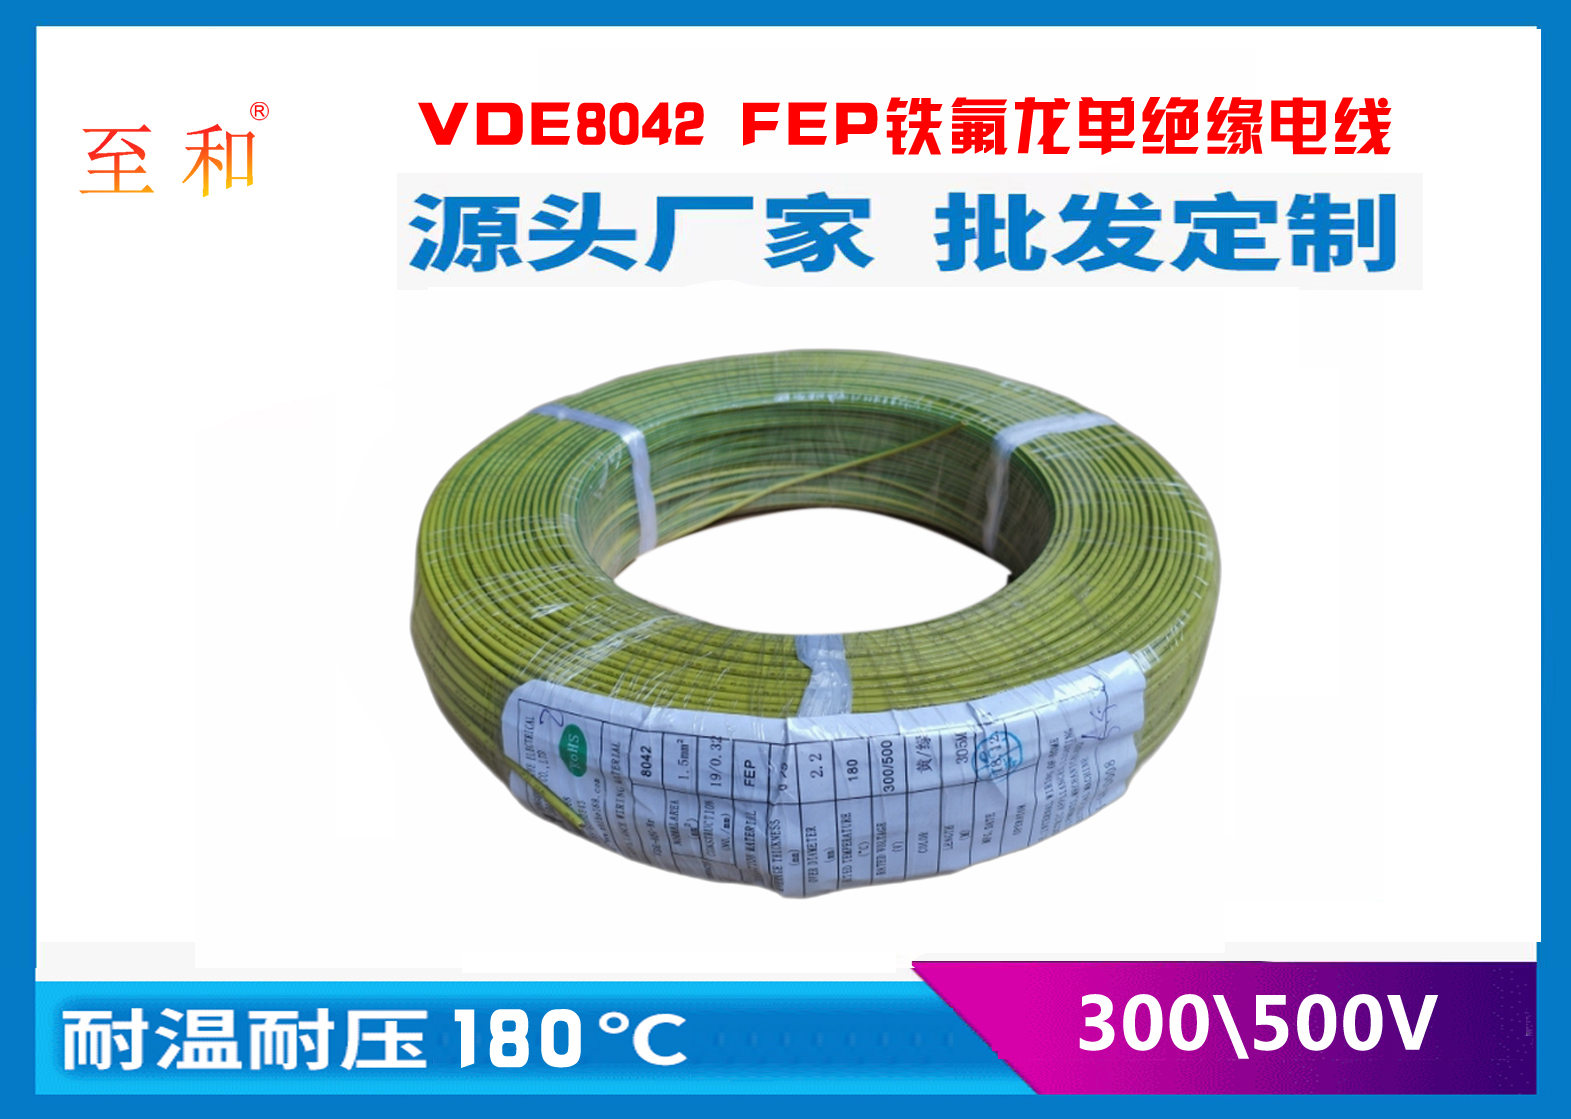 VDE8042 FEP铁氟龙单绝缘电线